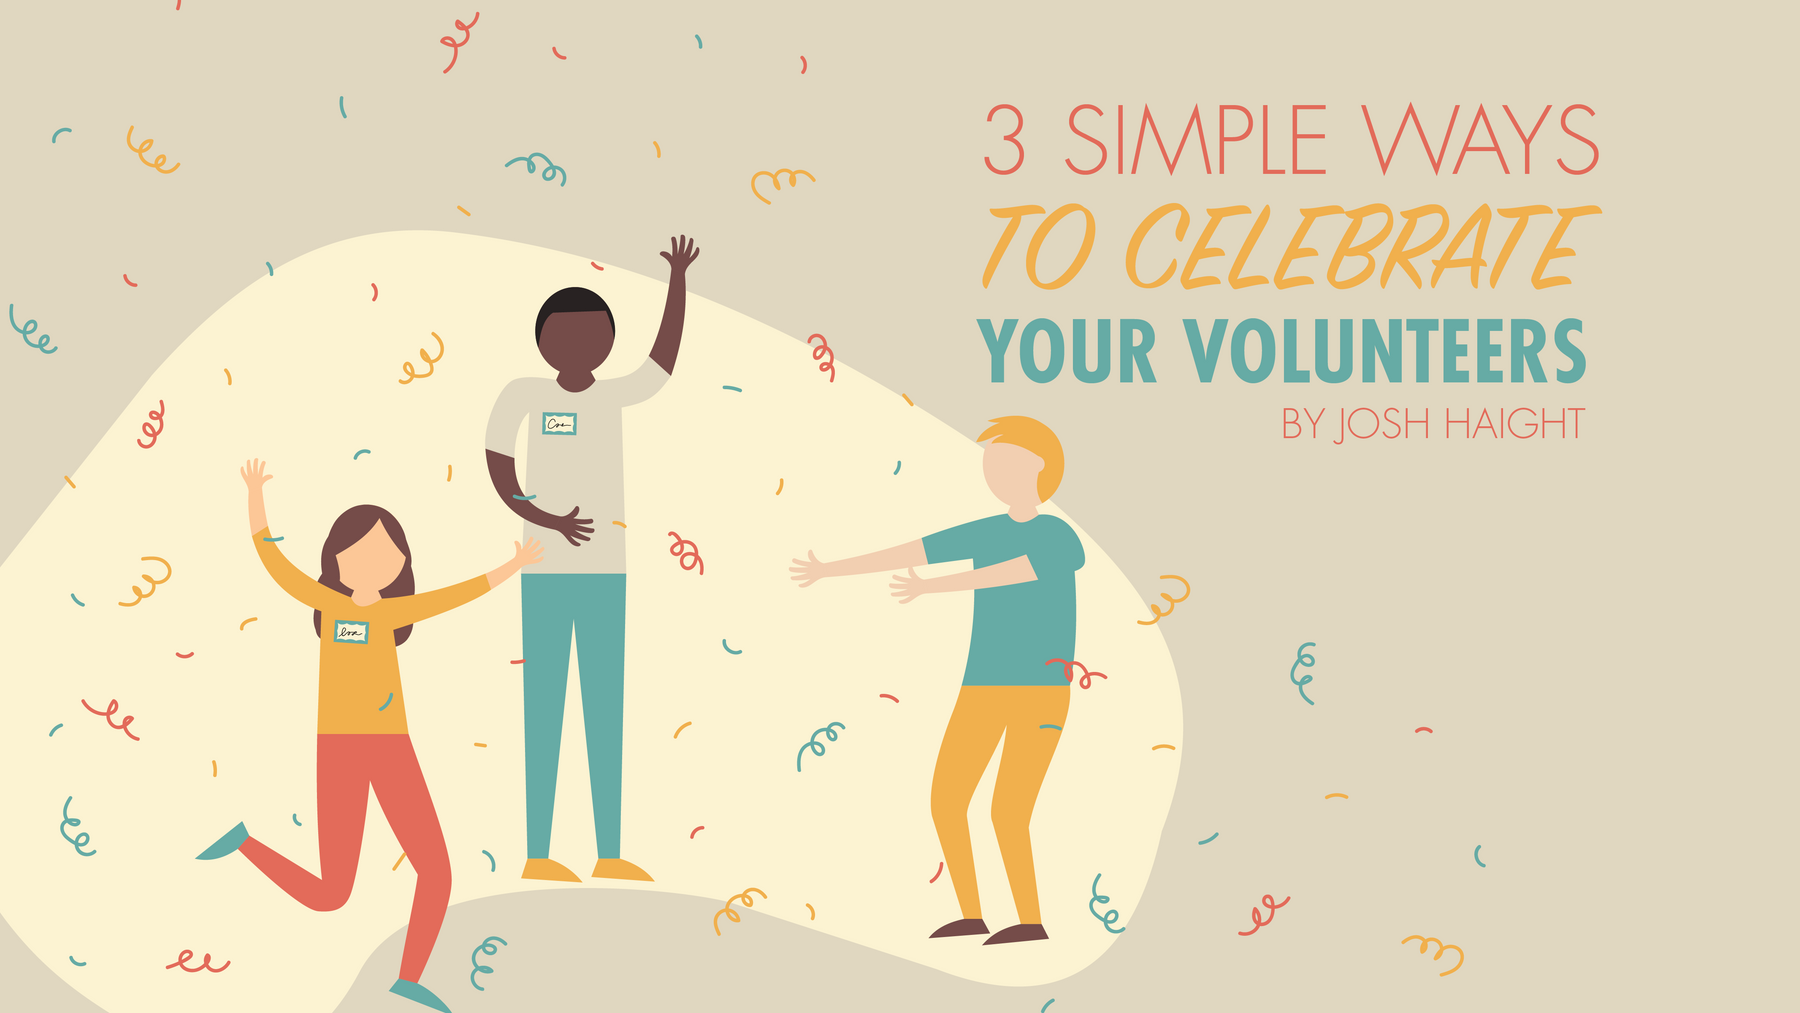 3 Simple Ways to Celebrate Your Volunteers